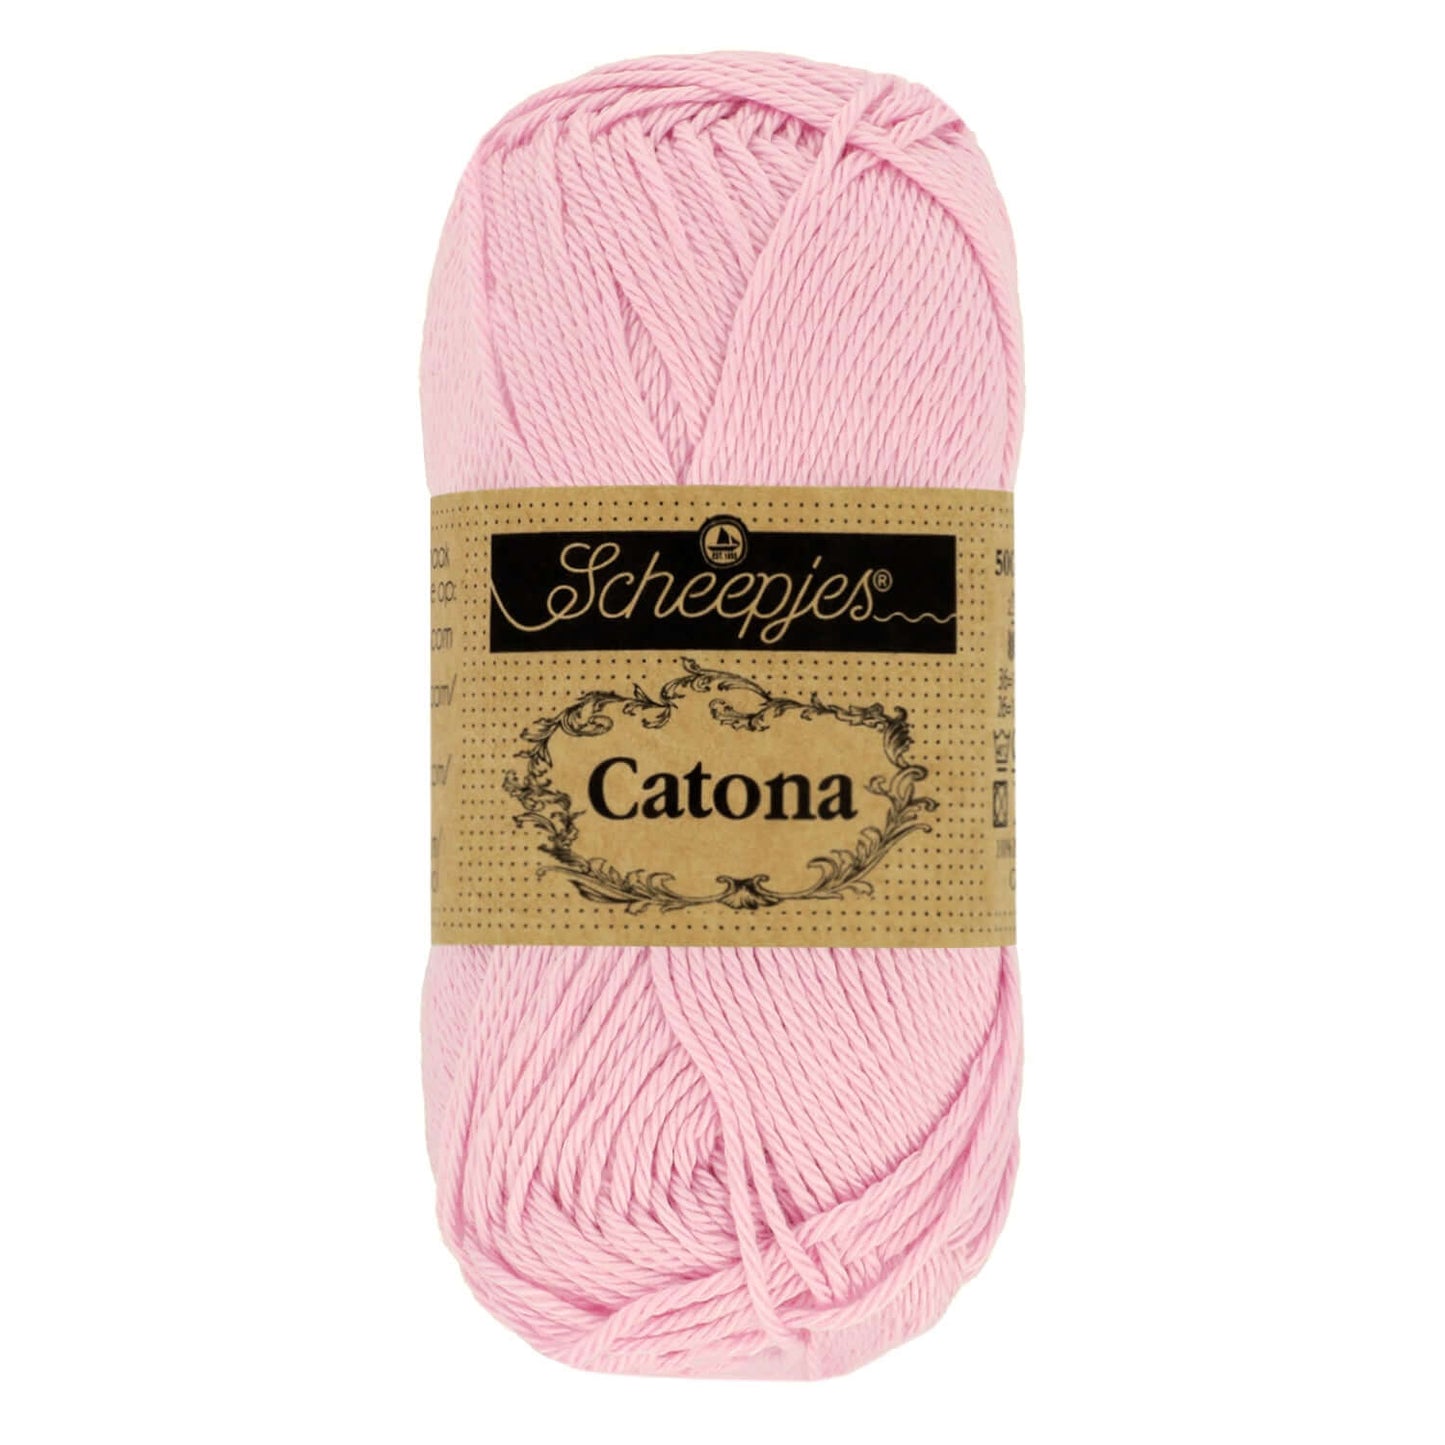 Scheepjes Catona - 246 Icy Pink